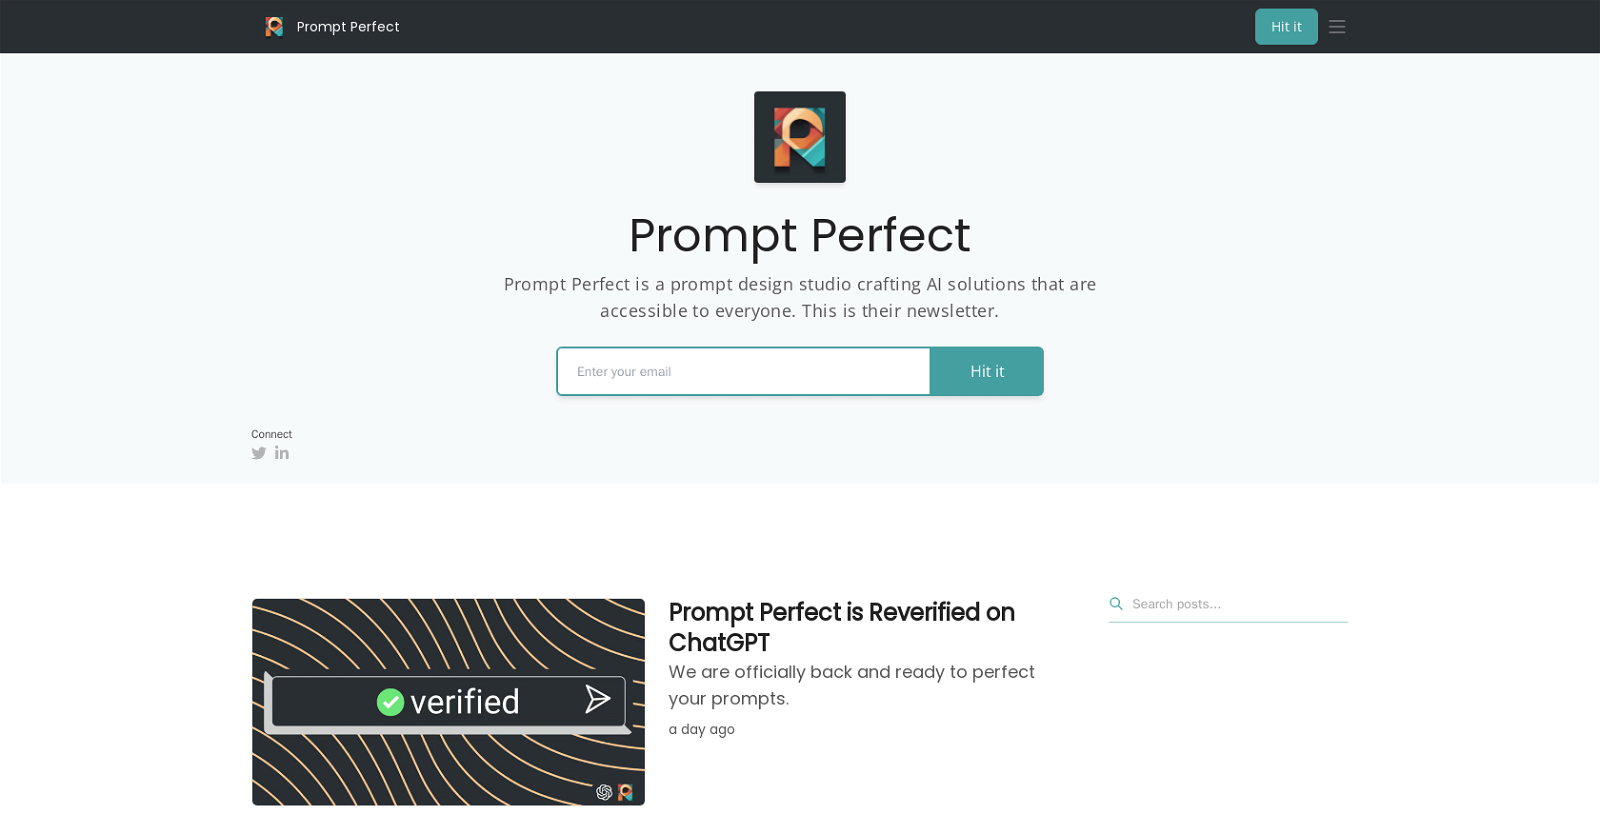 Promptperfect.xyz website